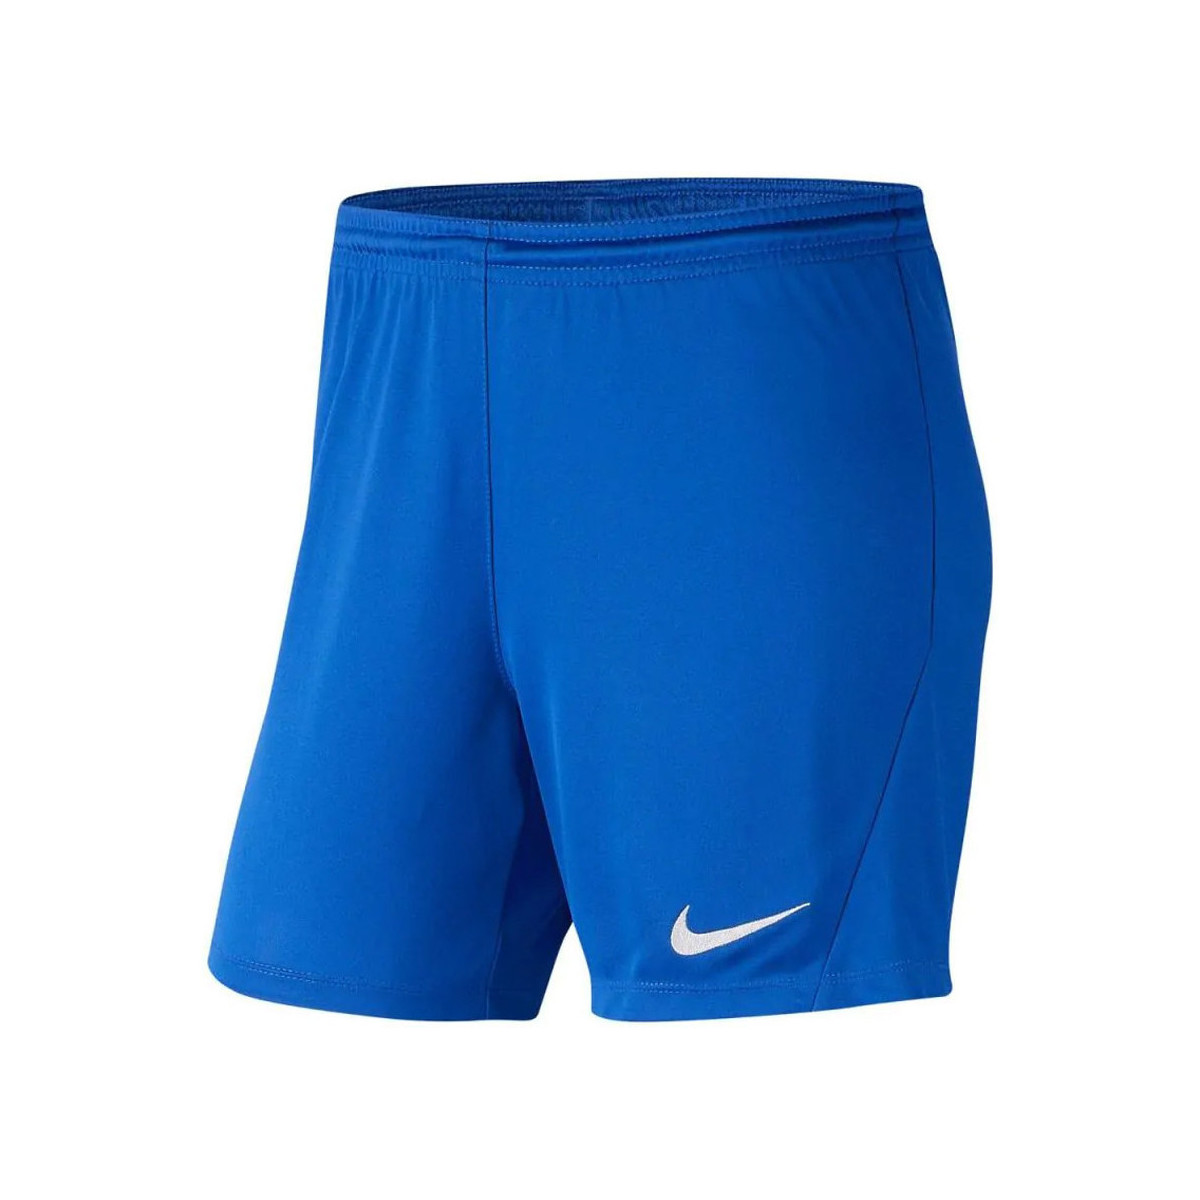 Vêtements Femme Shorts / Bermudas Nike BV6860-463 Bleu